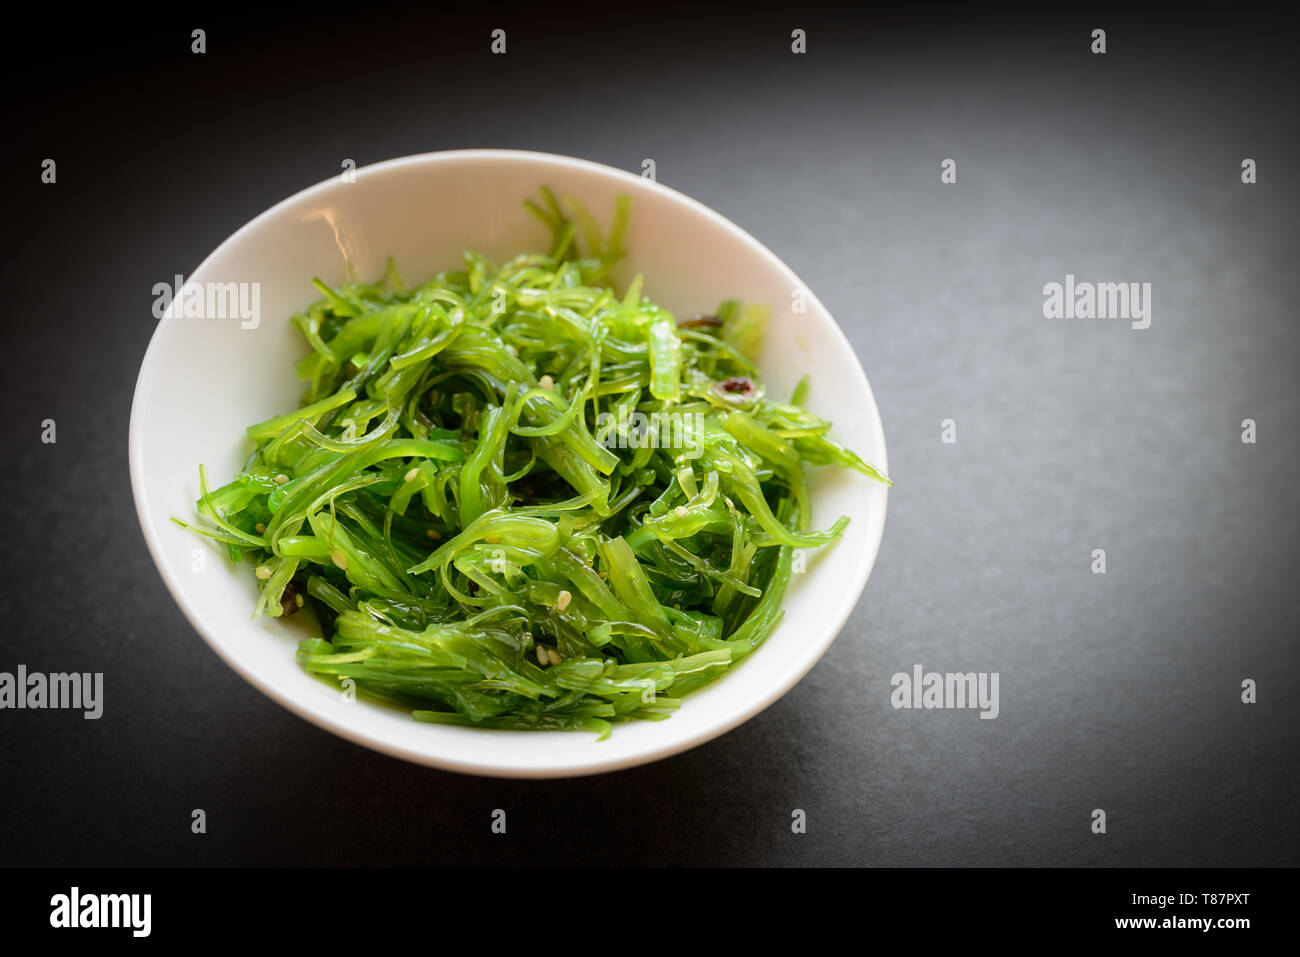 Wakame salad or seaweed salad on dark background. Selective focus. Stock Photo